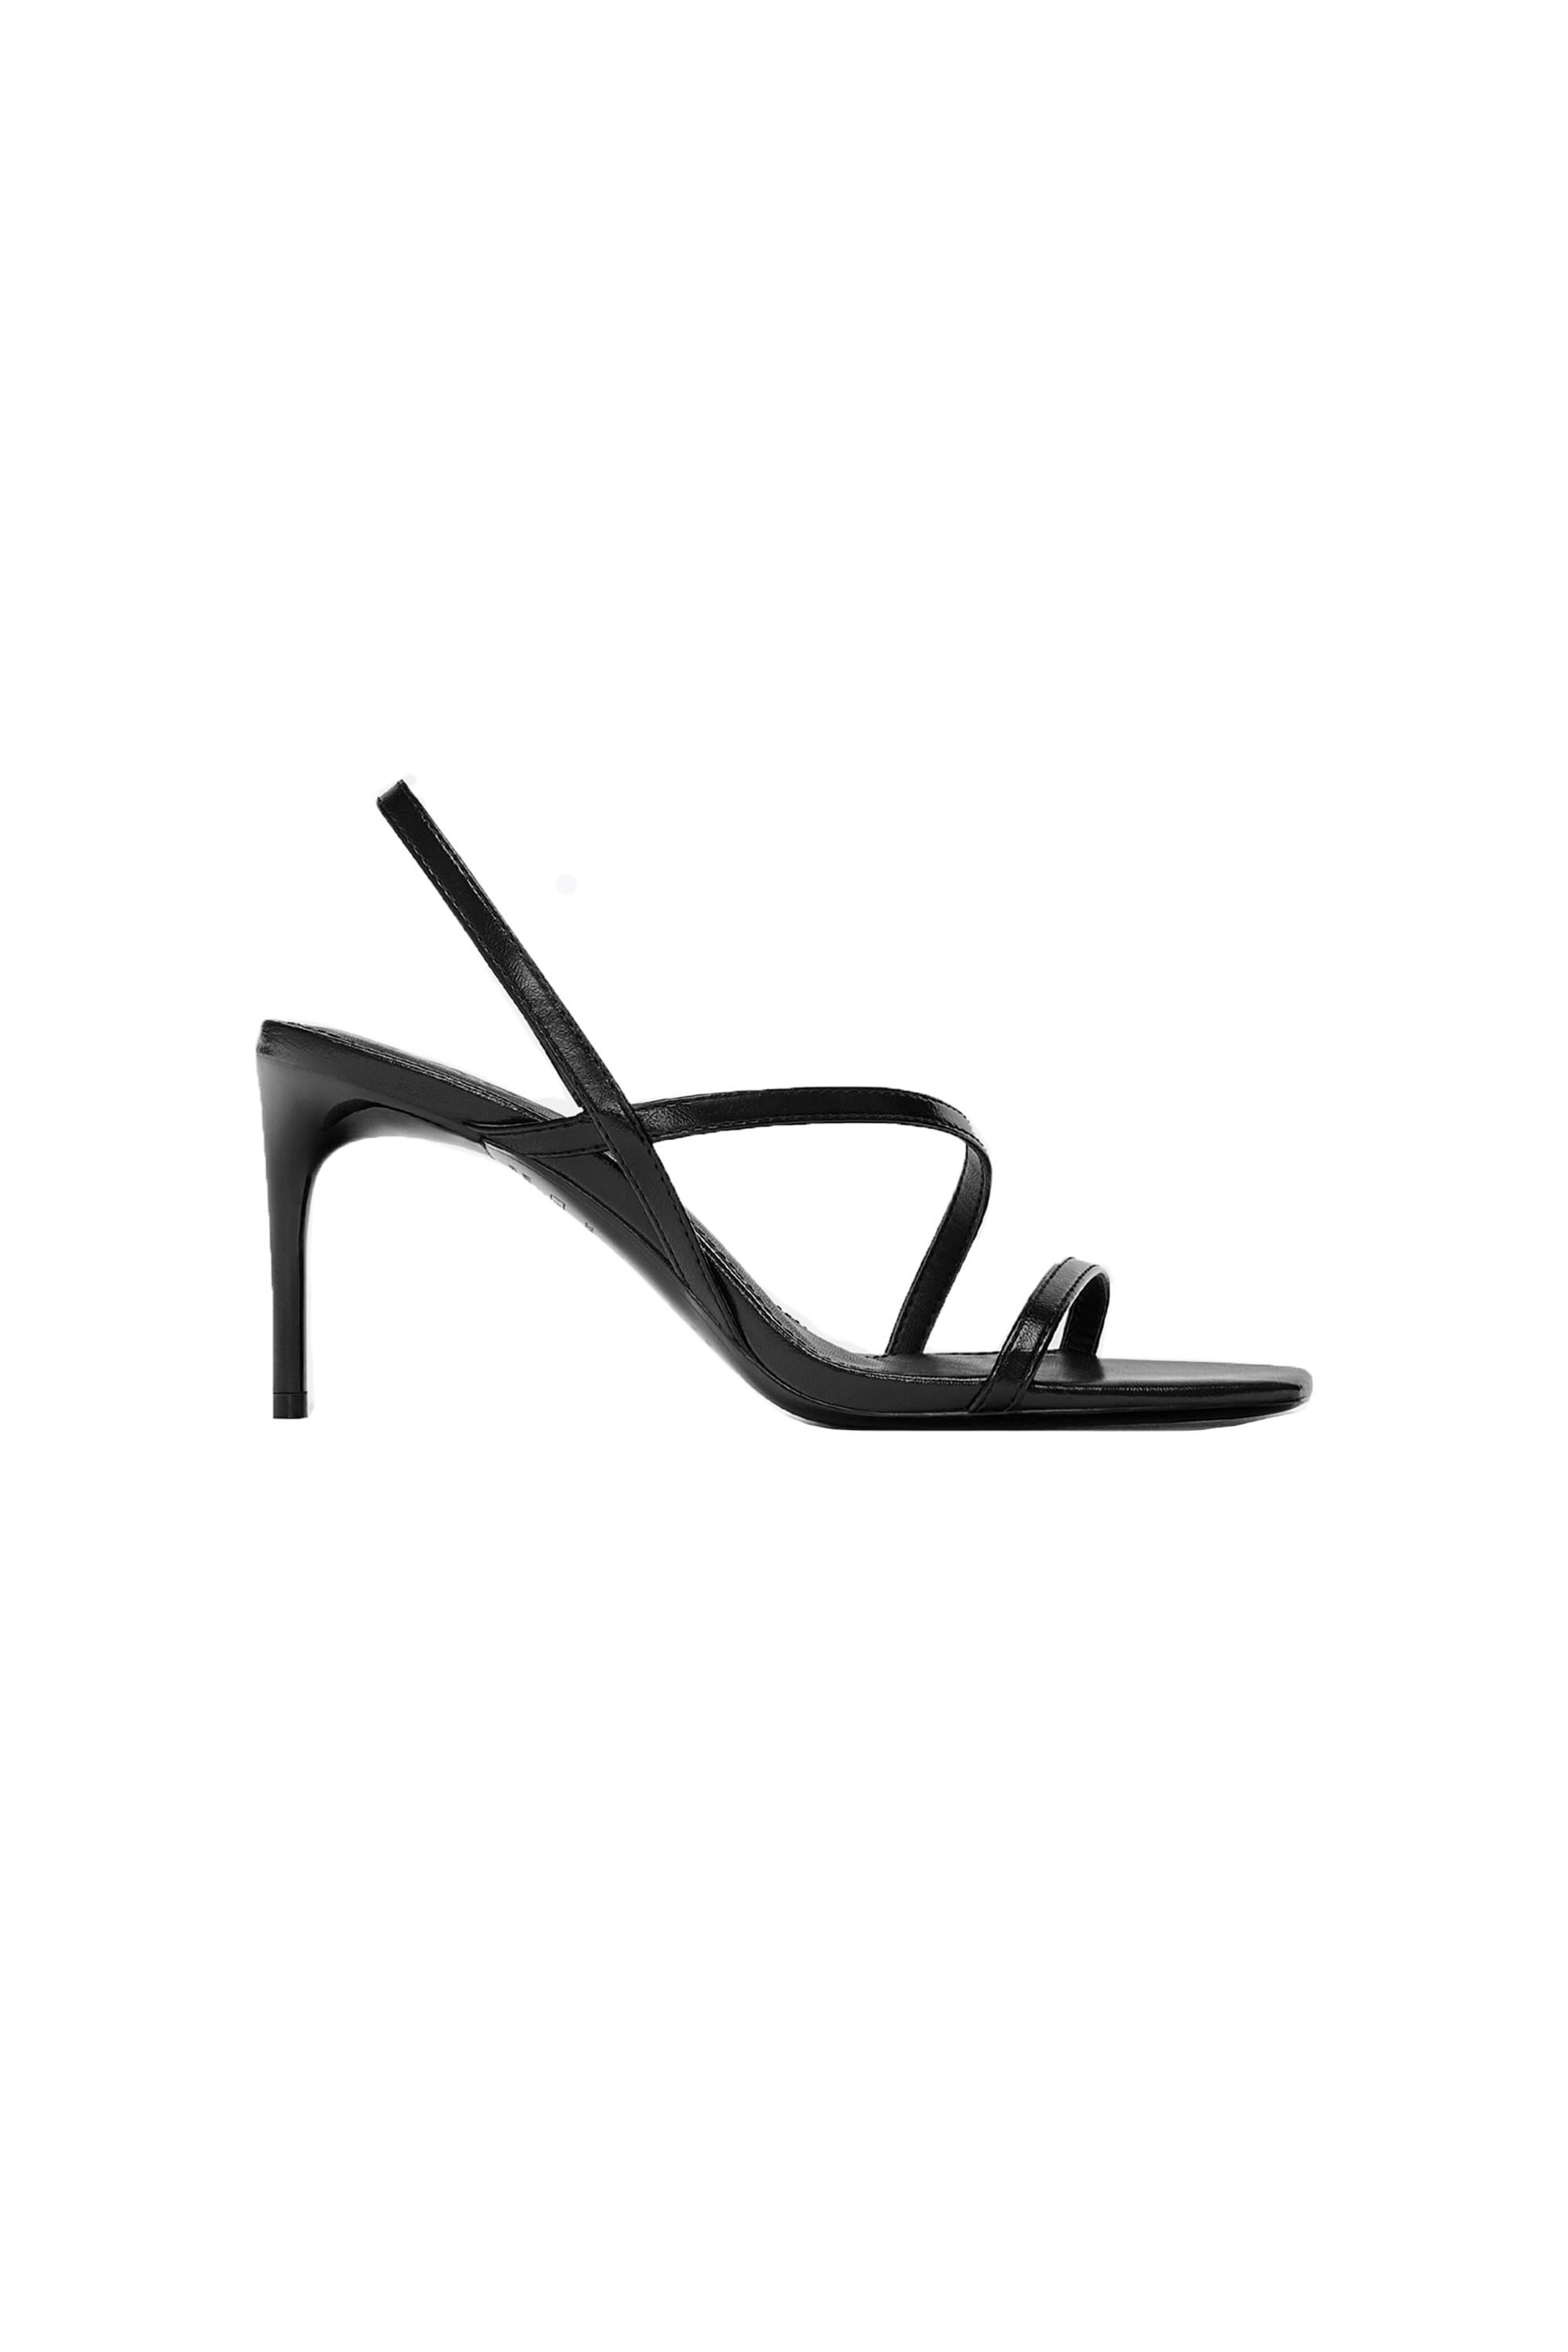 Zara Block Heel Ankle Strap Sandals in Black — UFO No More